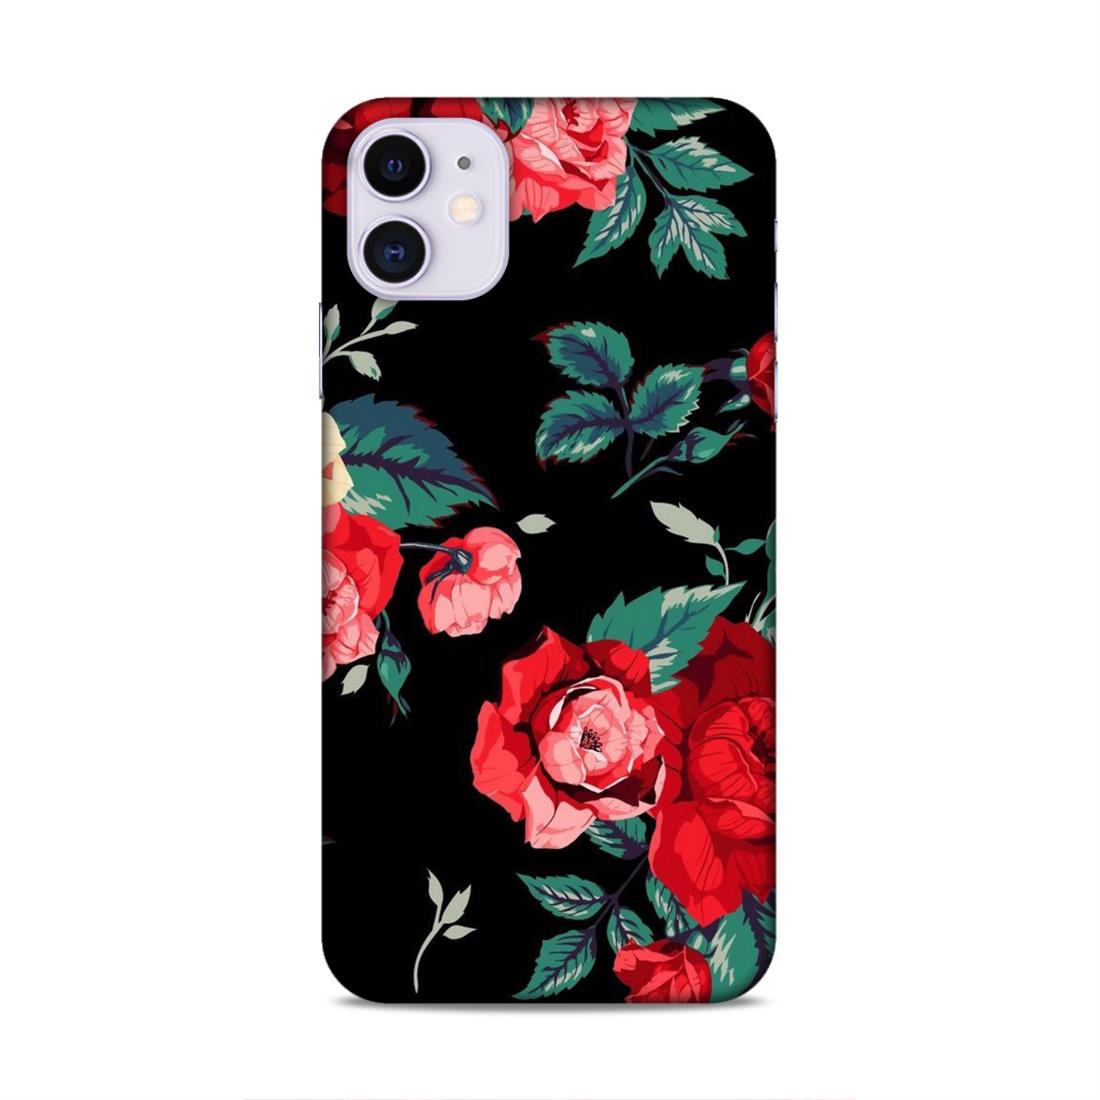 Flower Hard Back Case For Apple iPhone 11